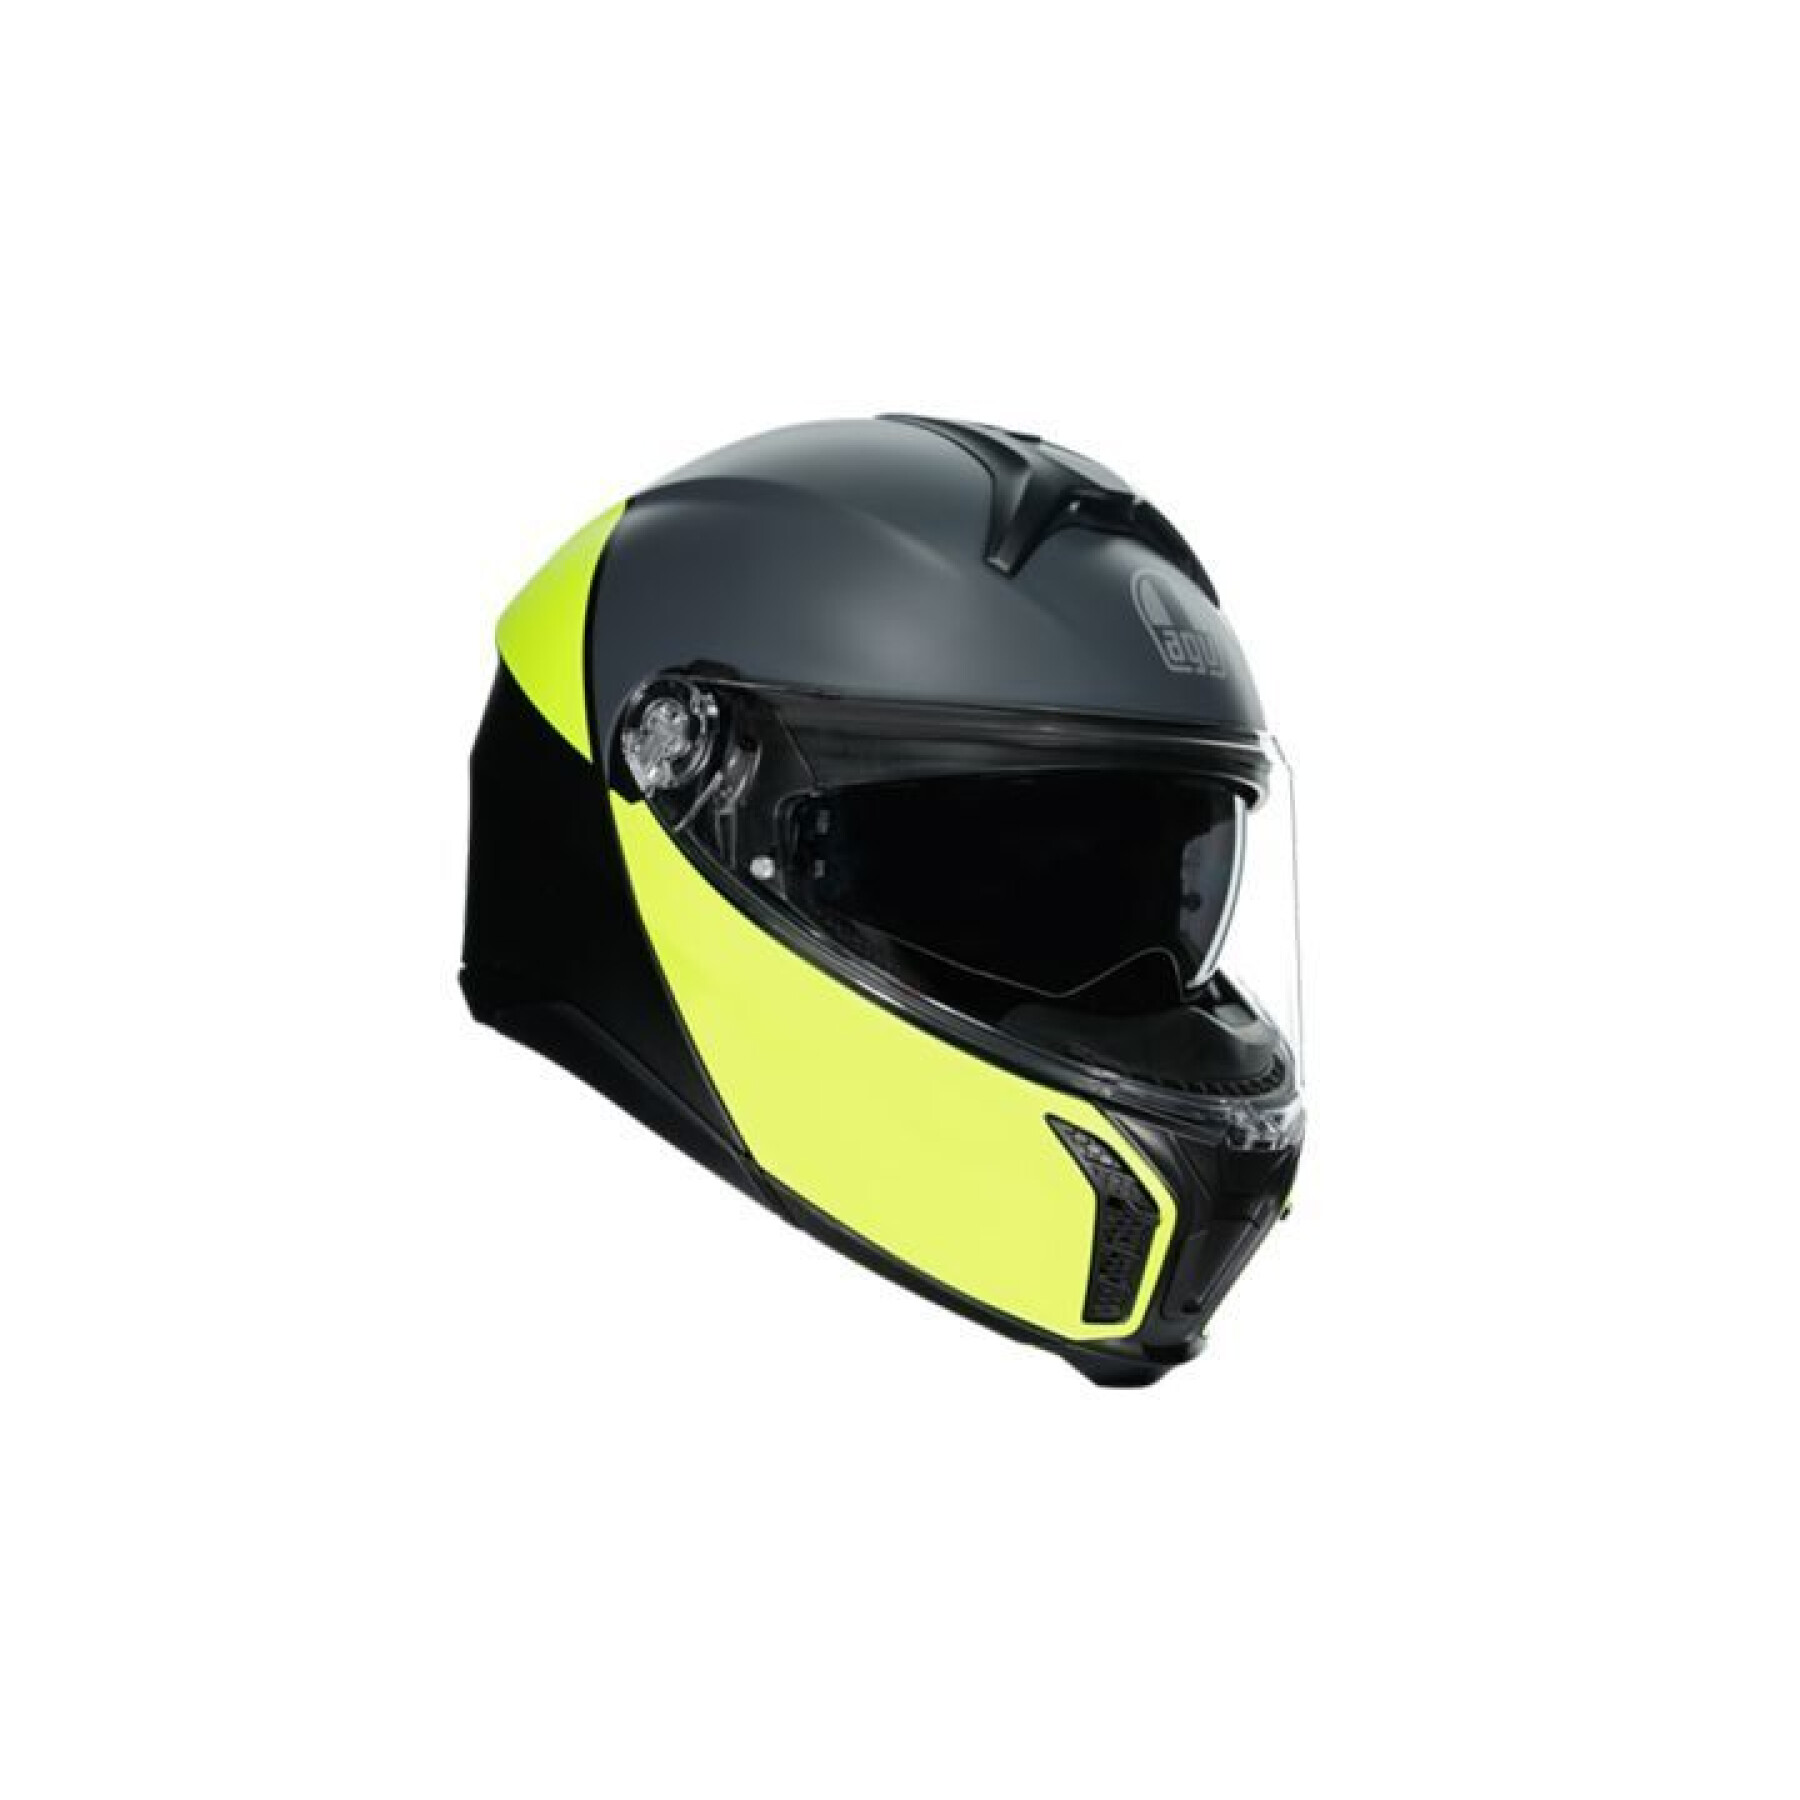 Modular motorcycle helmet AGV Tourmodular Multi